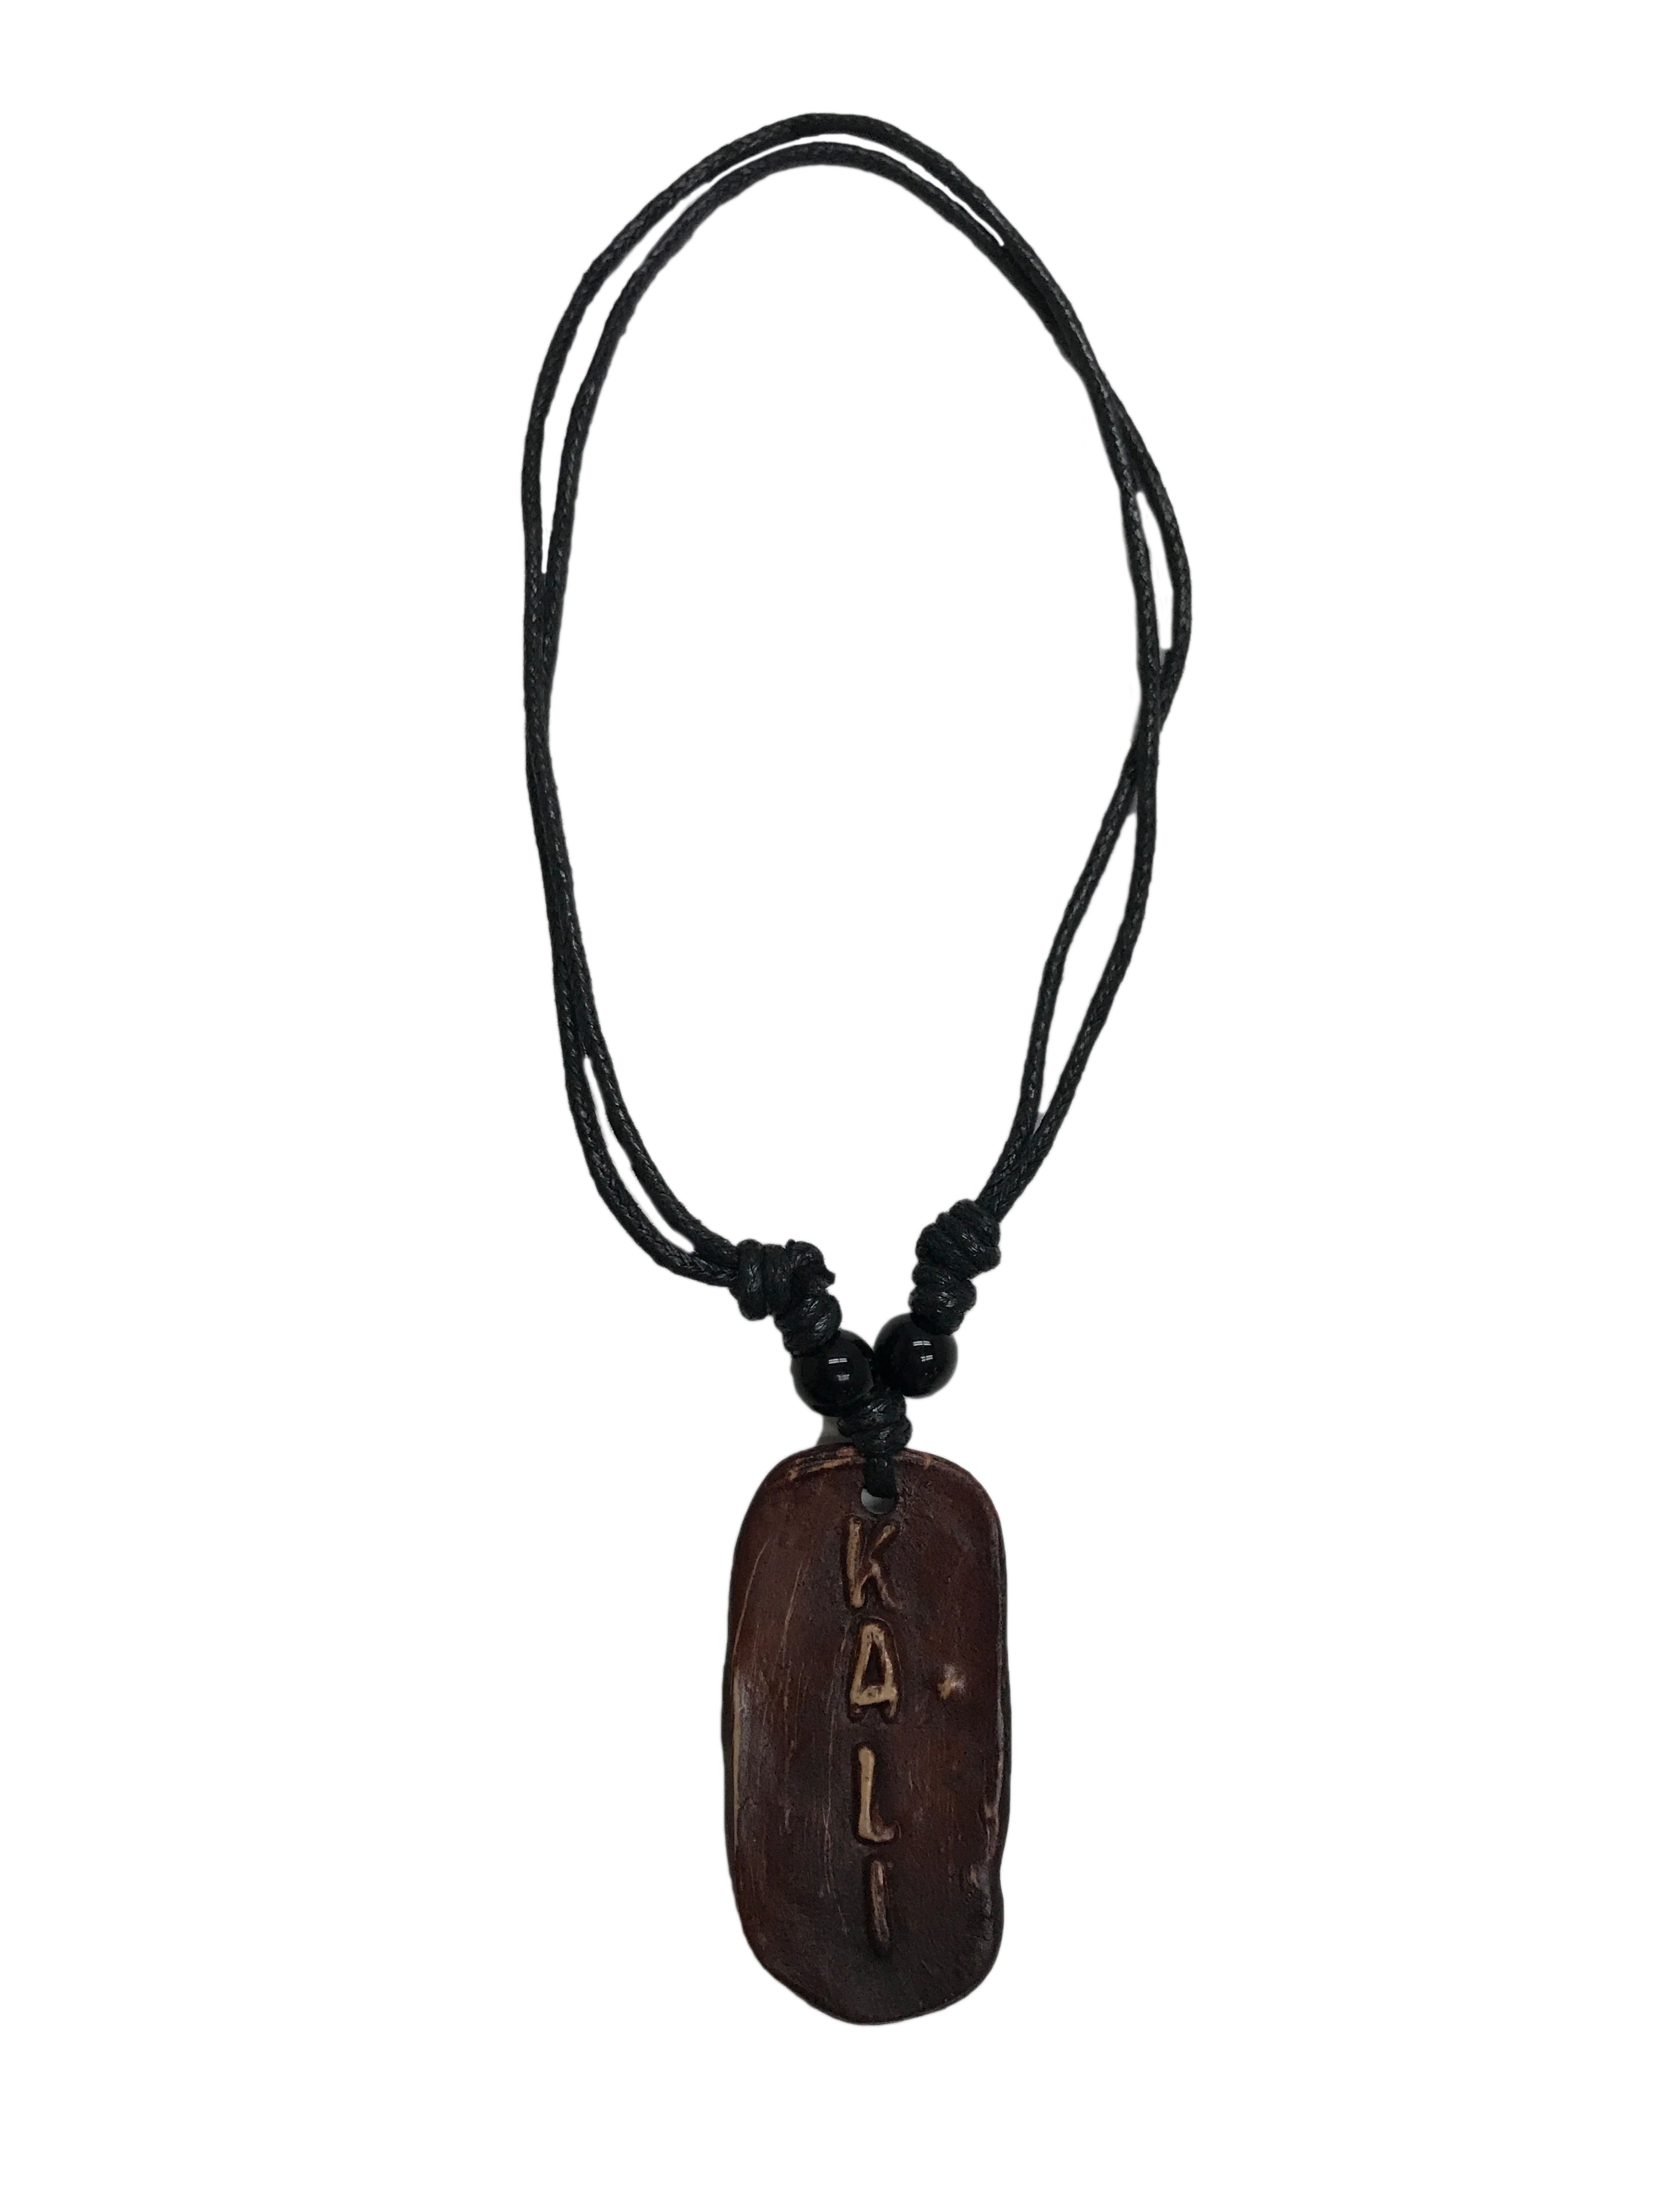 Handmade "KALI" Adjustable Necklace